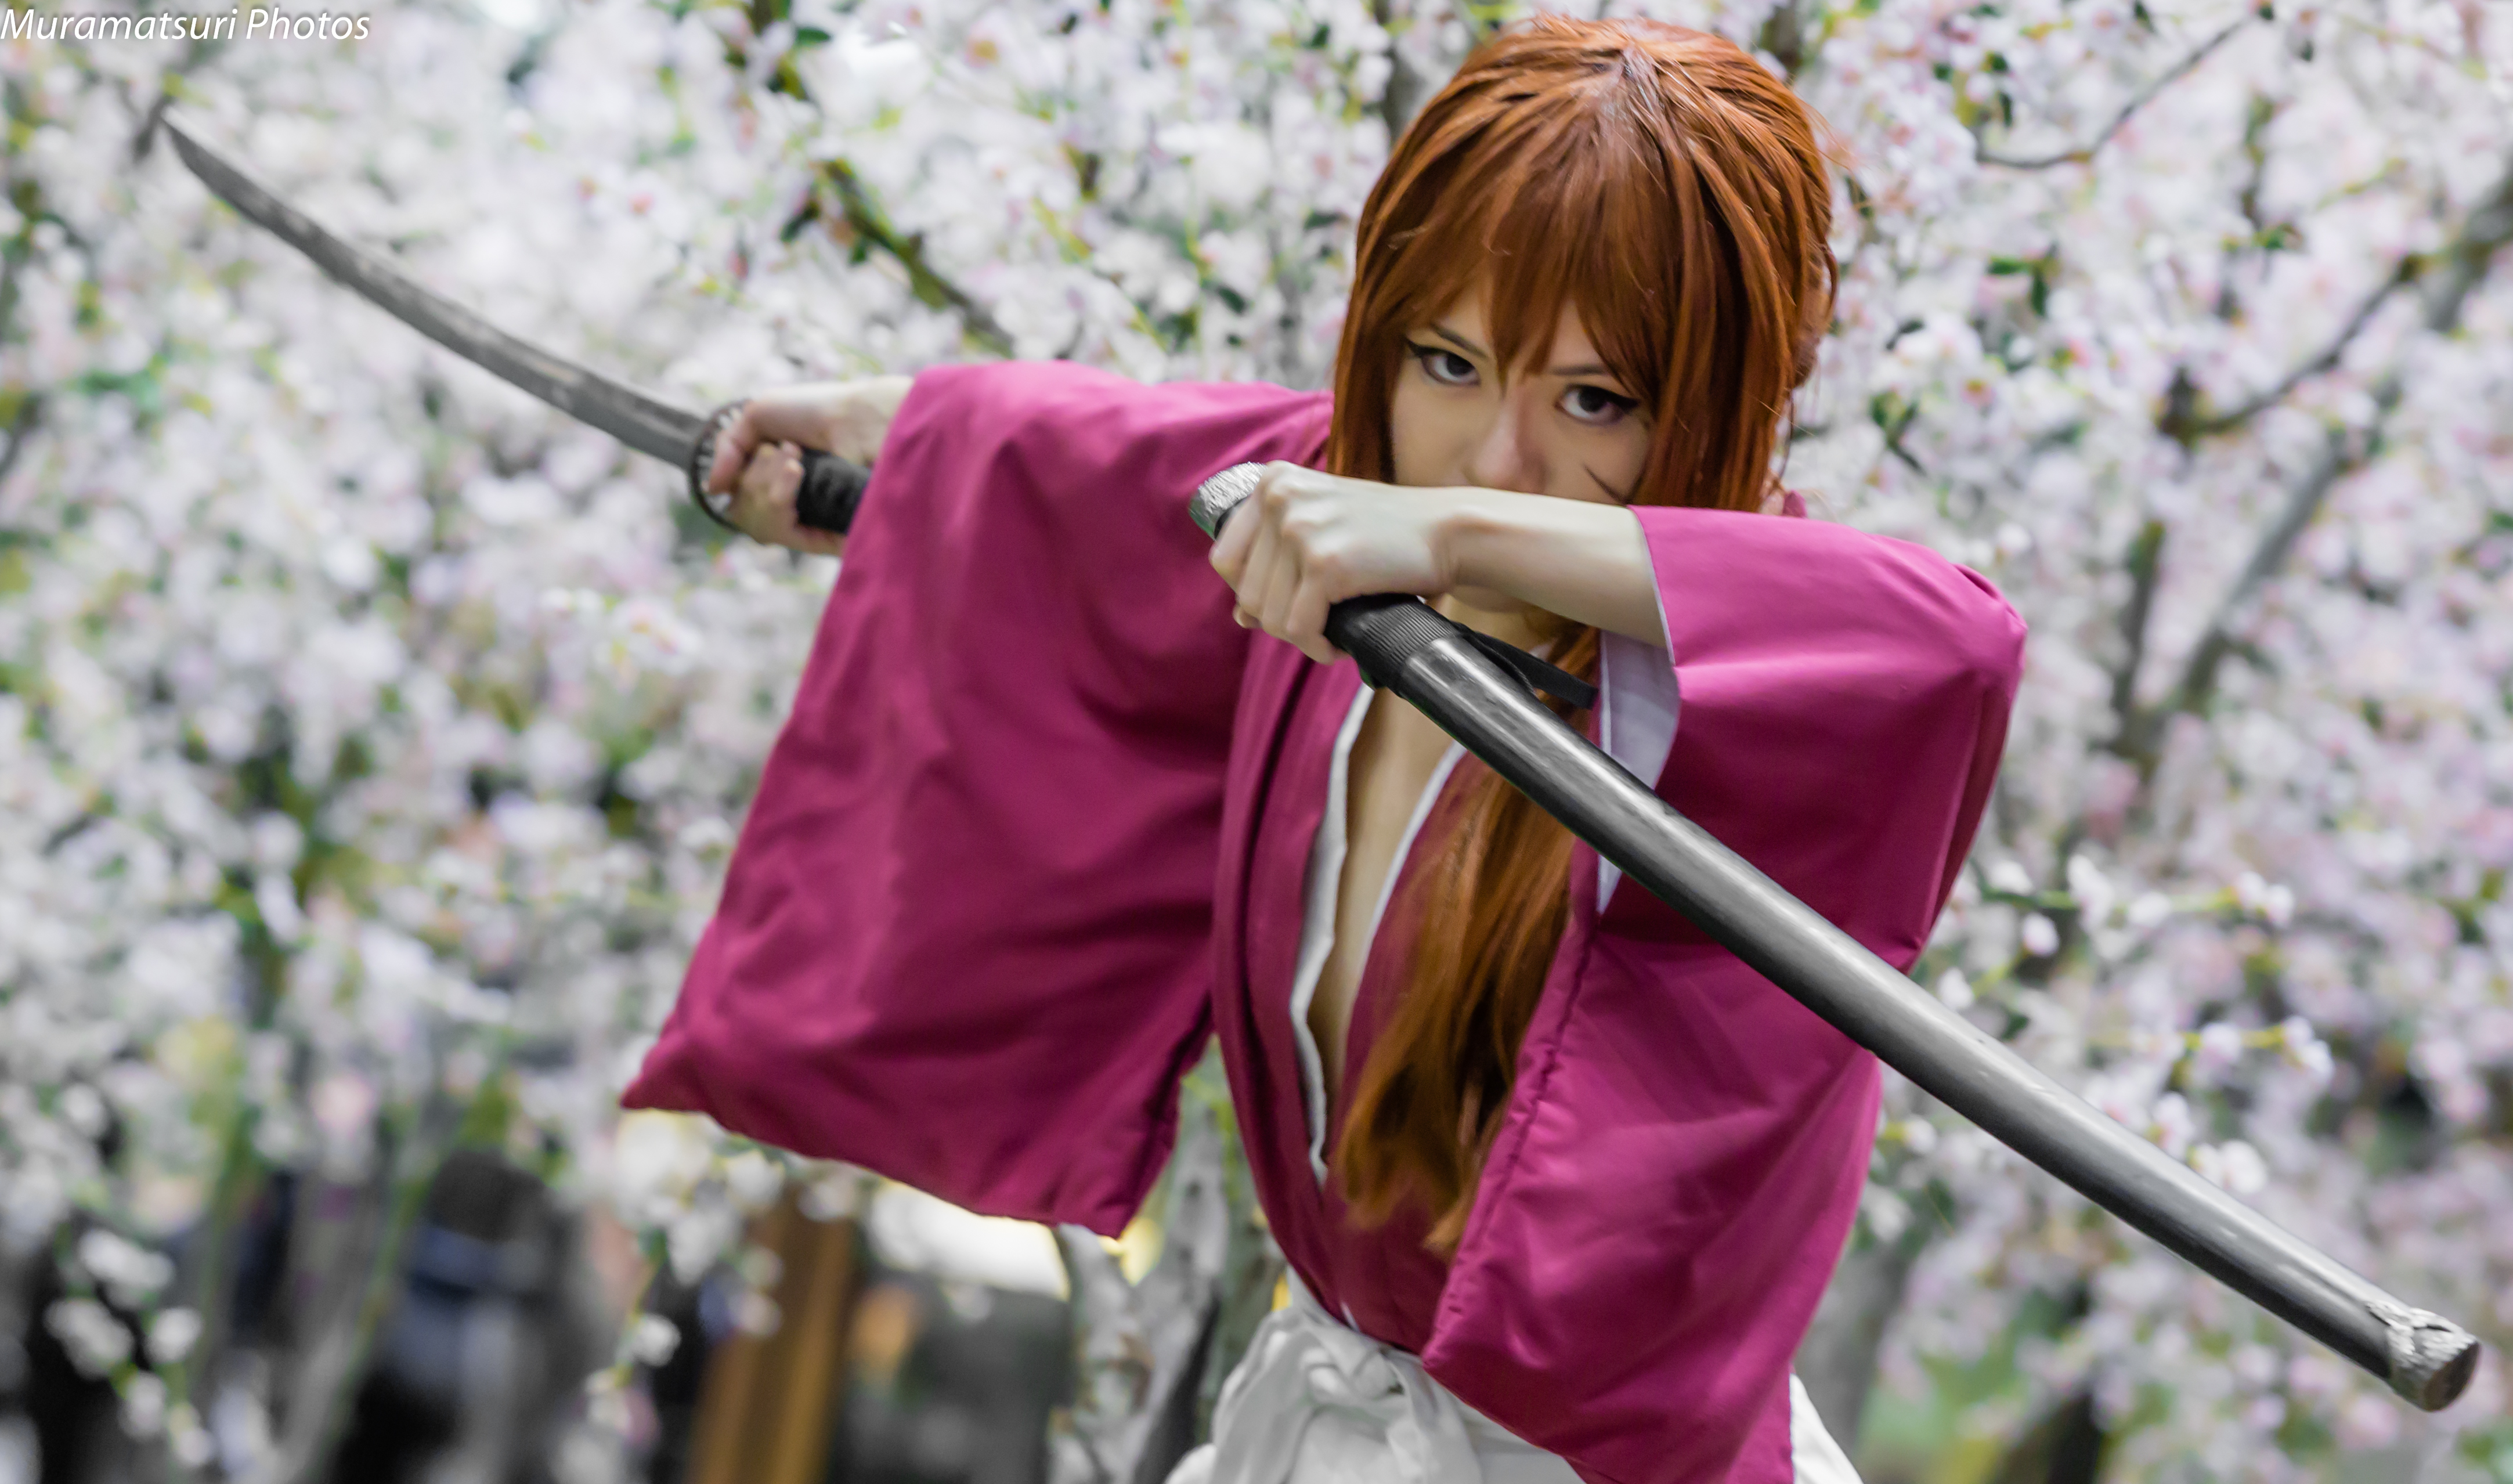  Himura Kenshin Cosplay Costume Anime Rurouni Kenshin